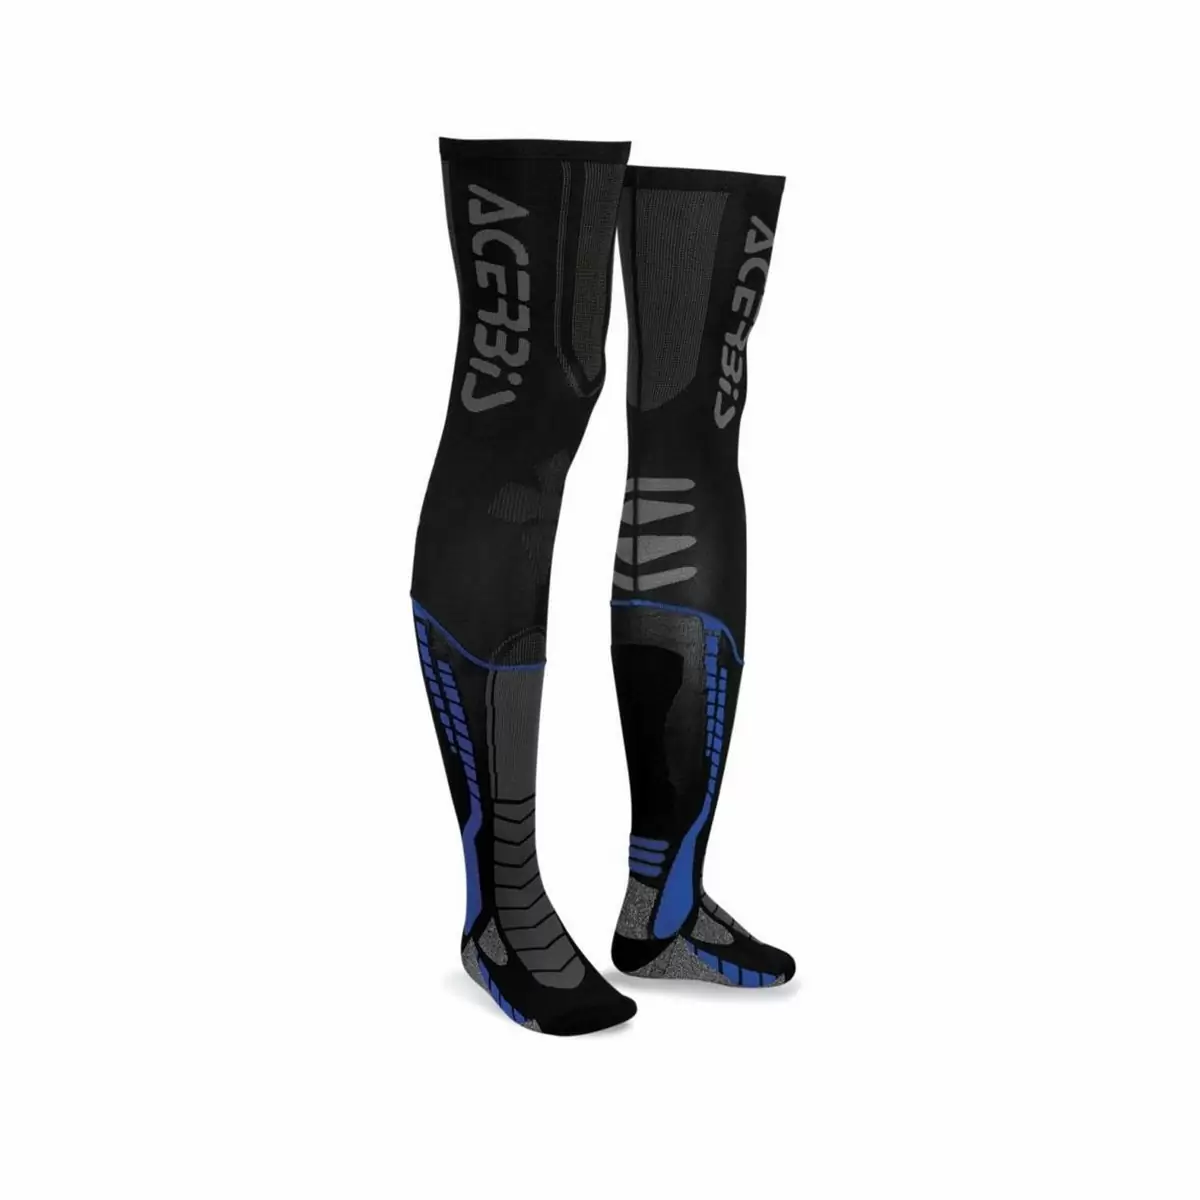 Calze lunghe motocross X-LEG pro blu taglia L/XL - image